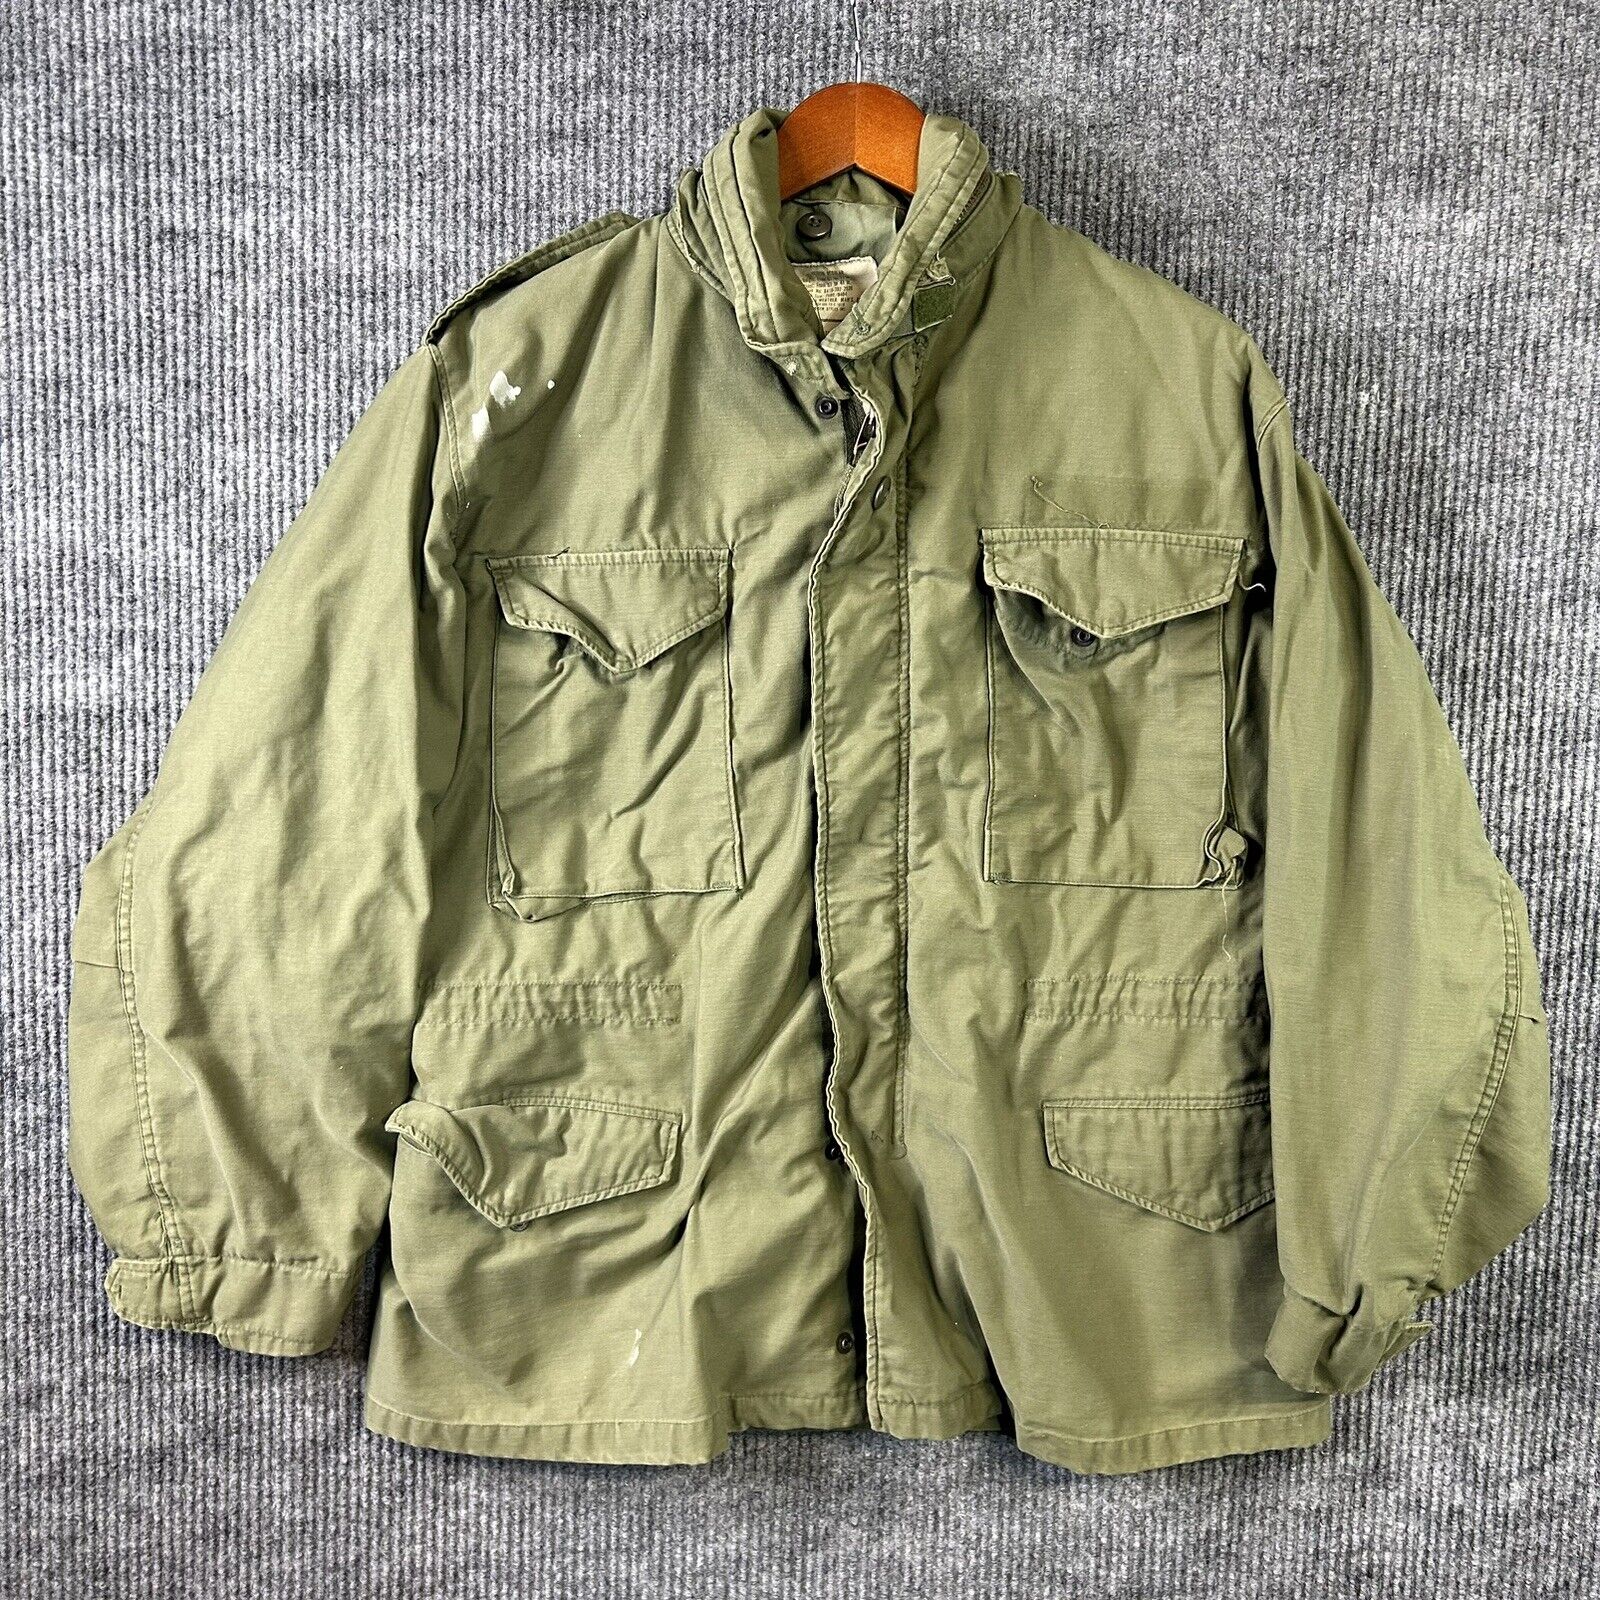 Vintage Military M65 Cold Weather Field Coat Size Medium Regular Jacket